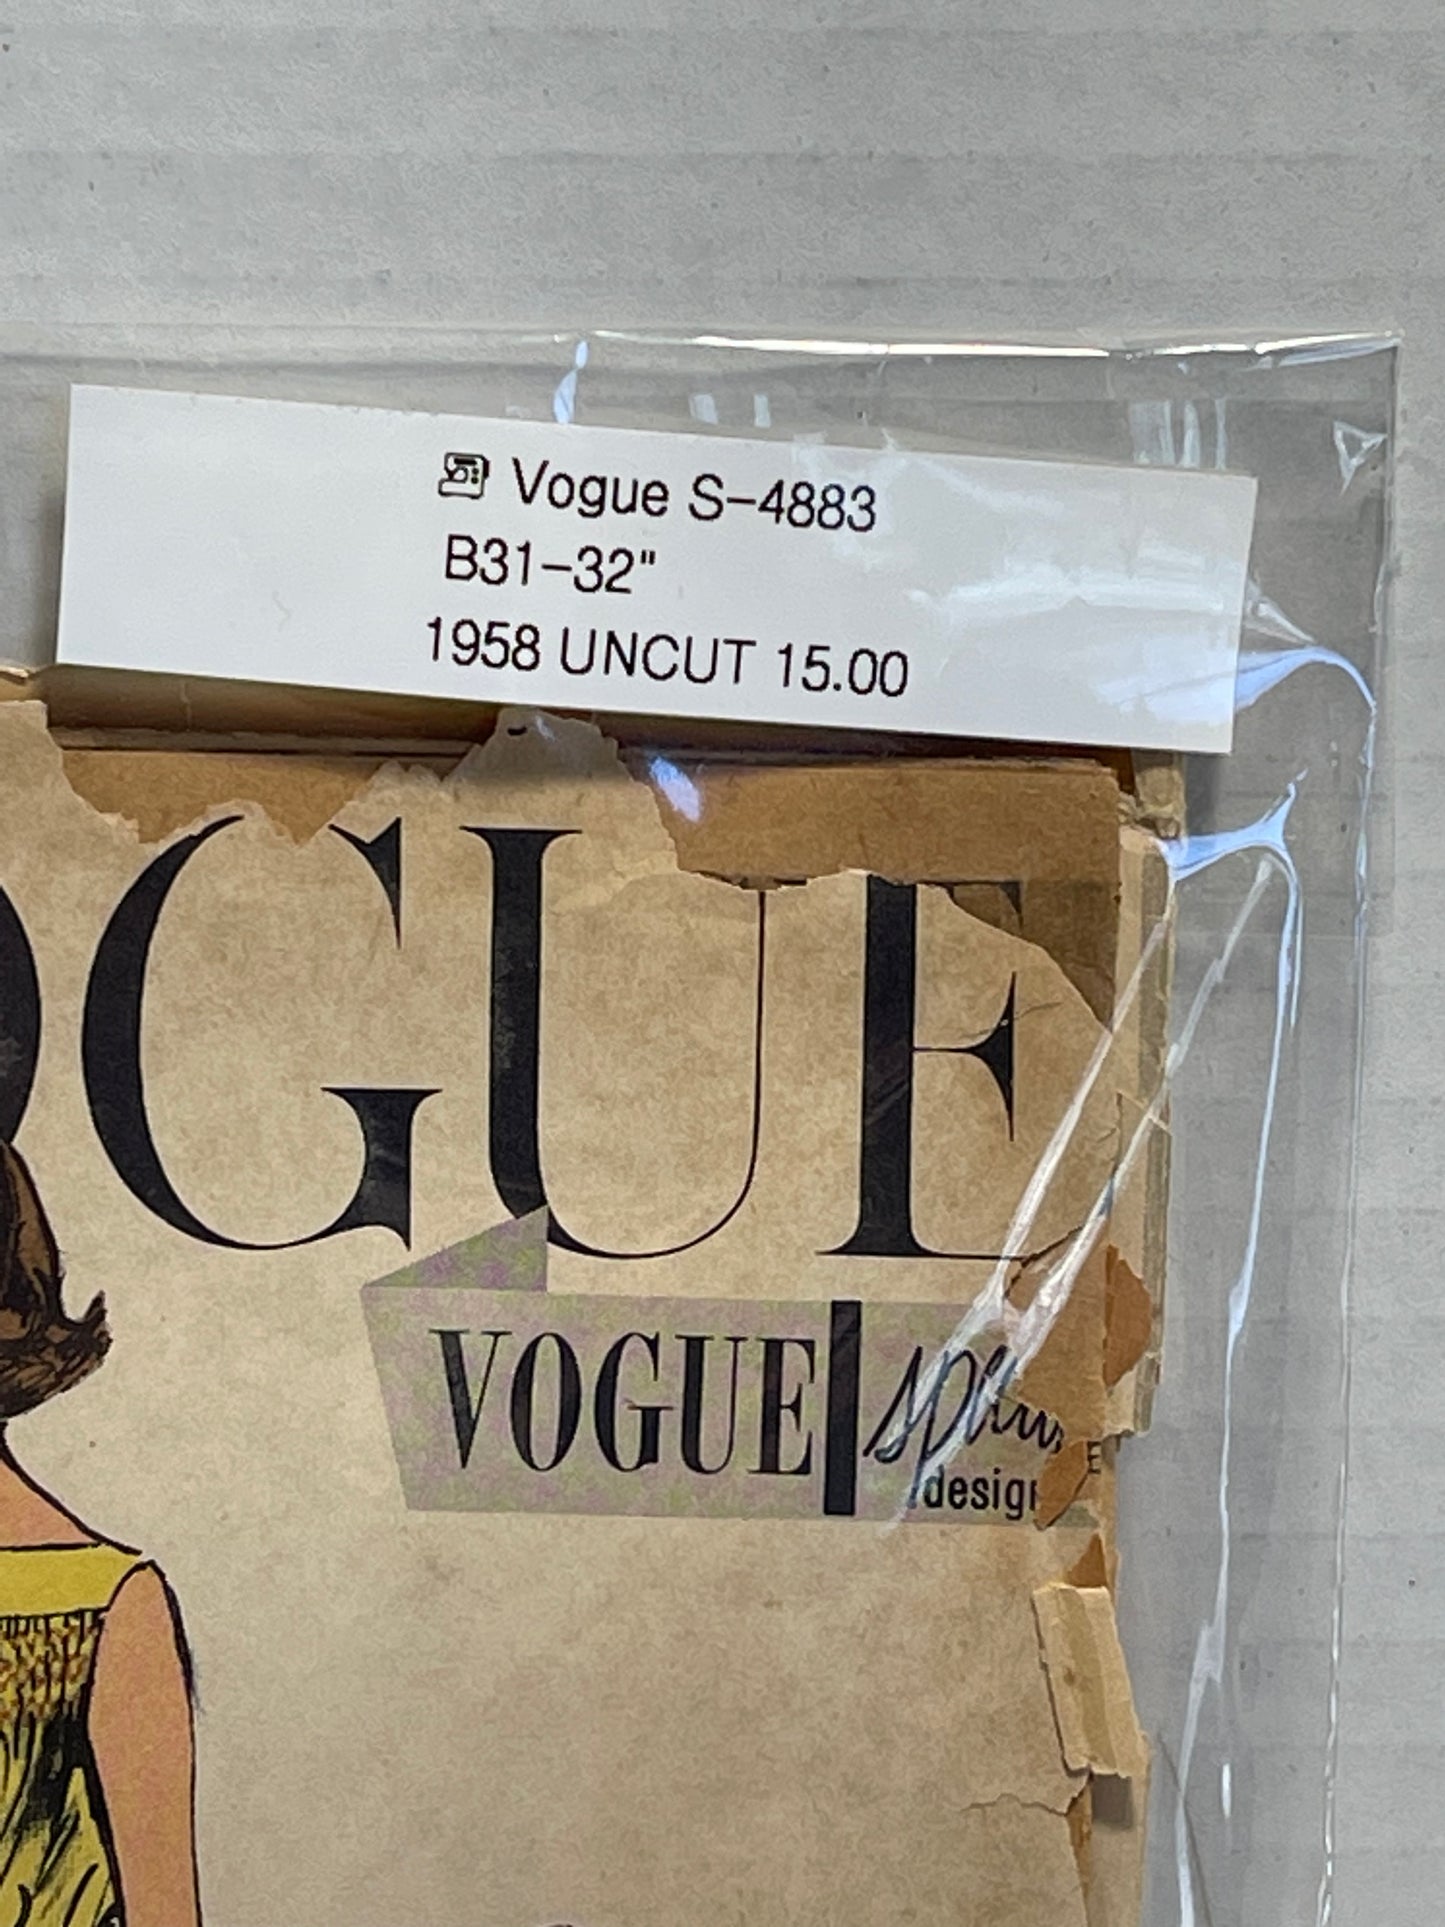 Vogue S-4883